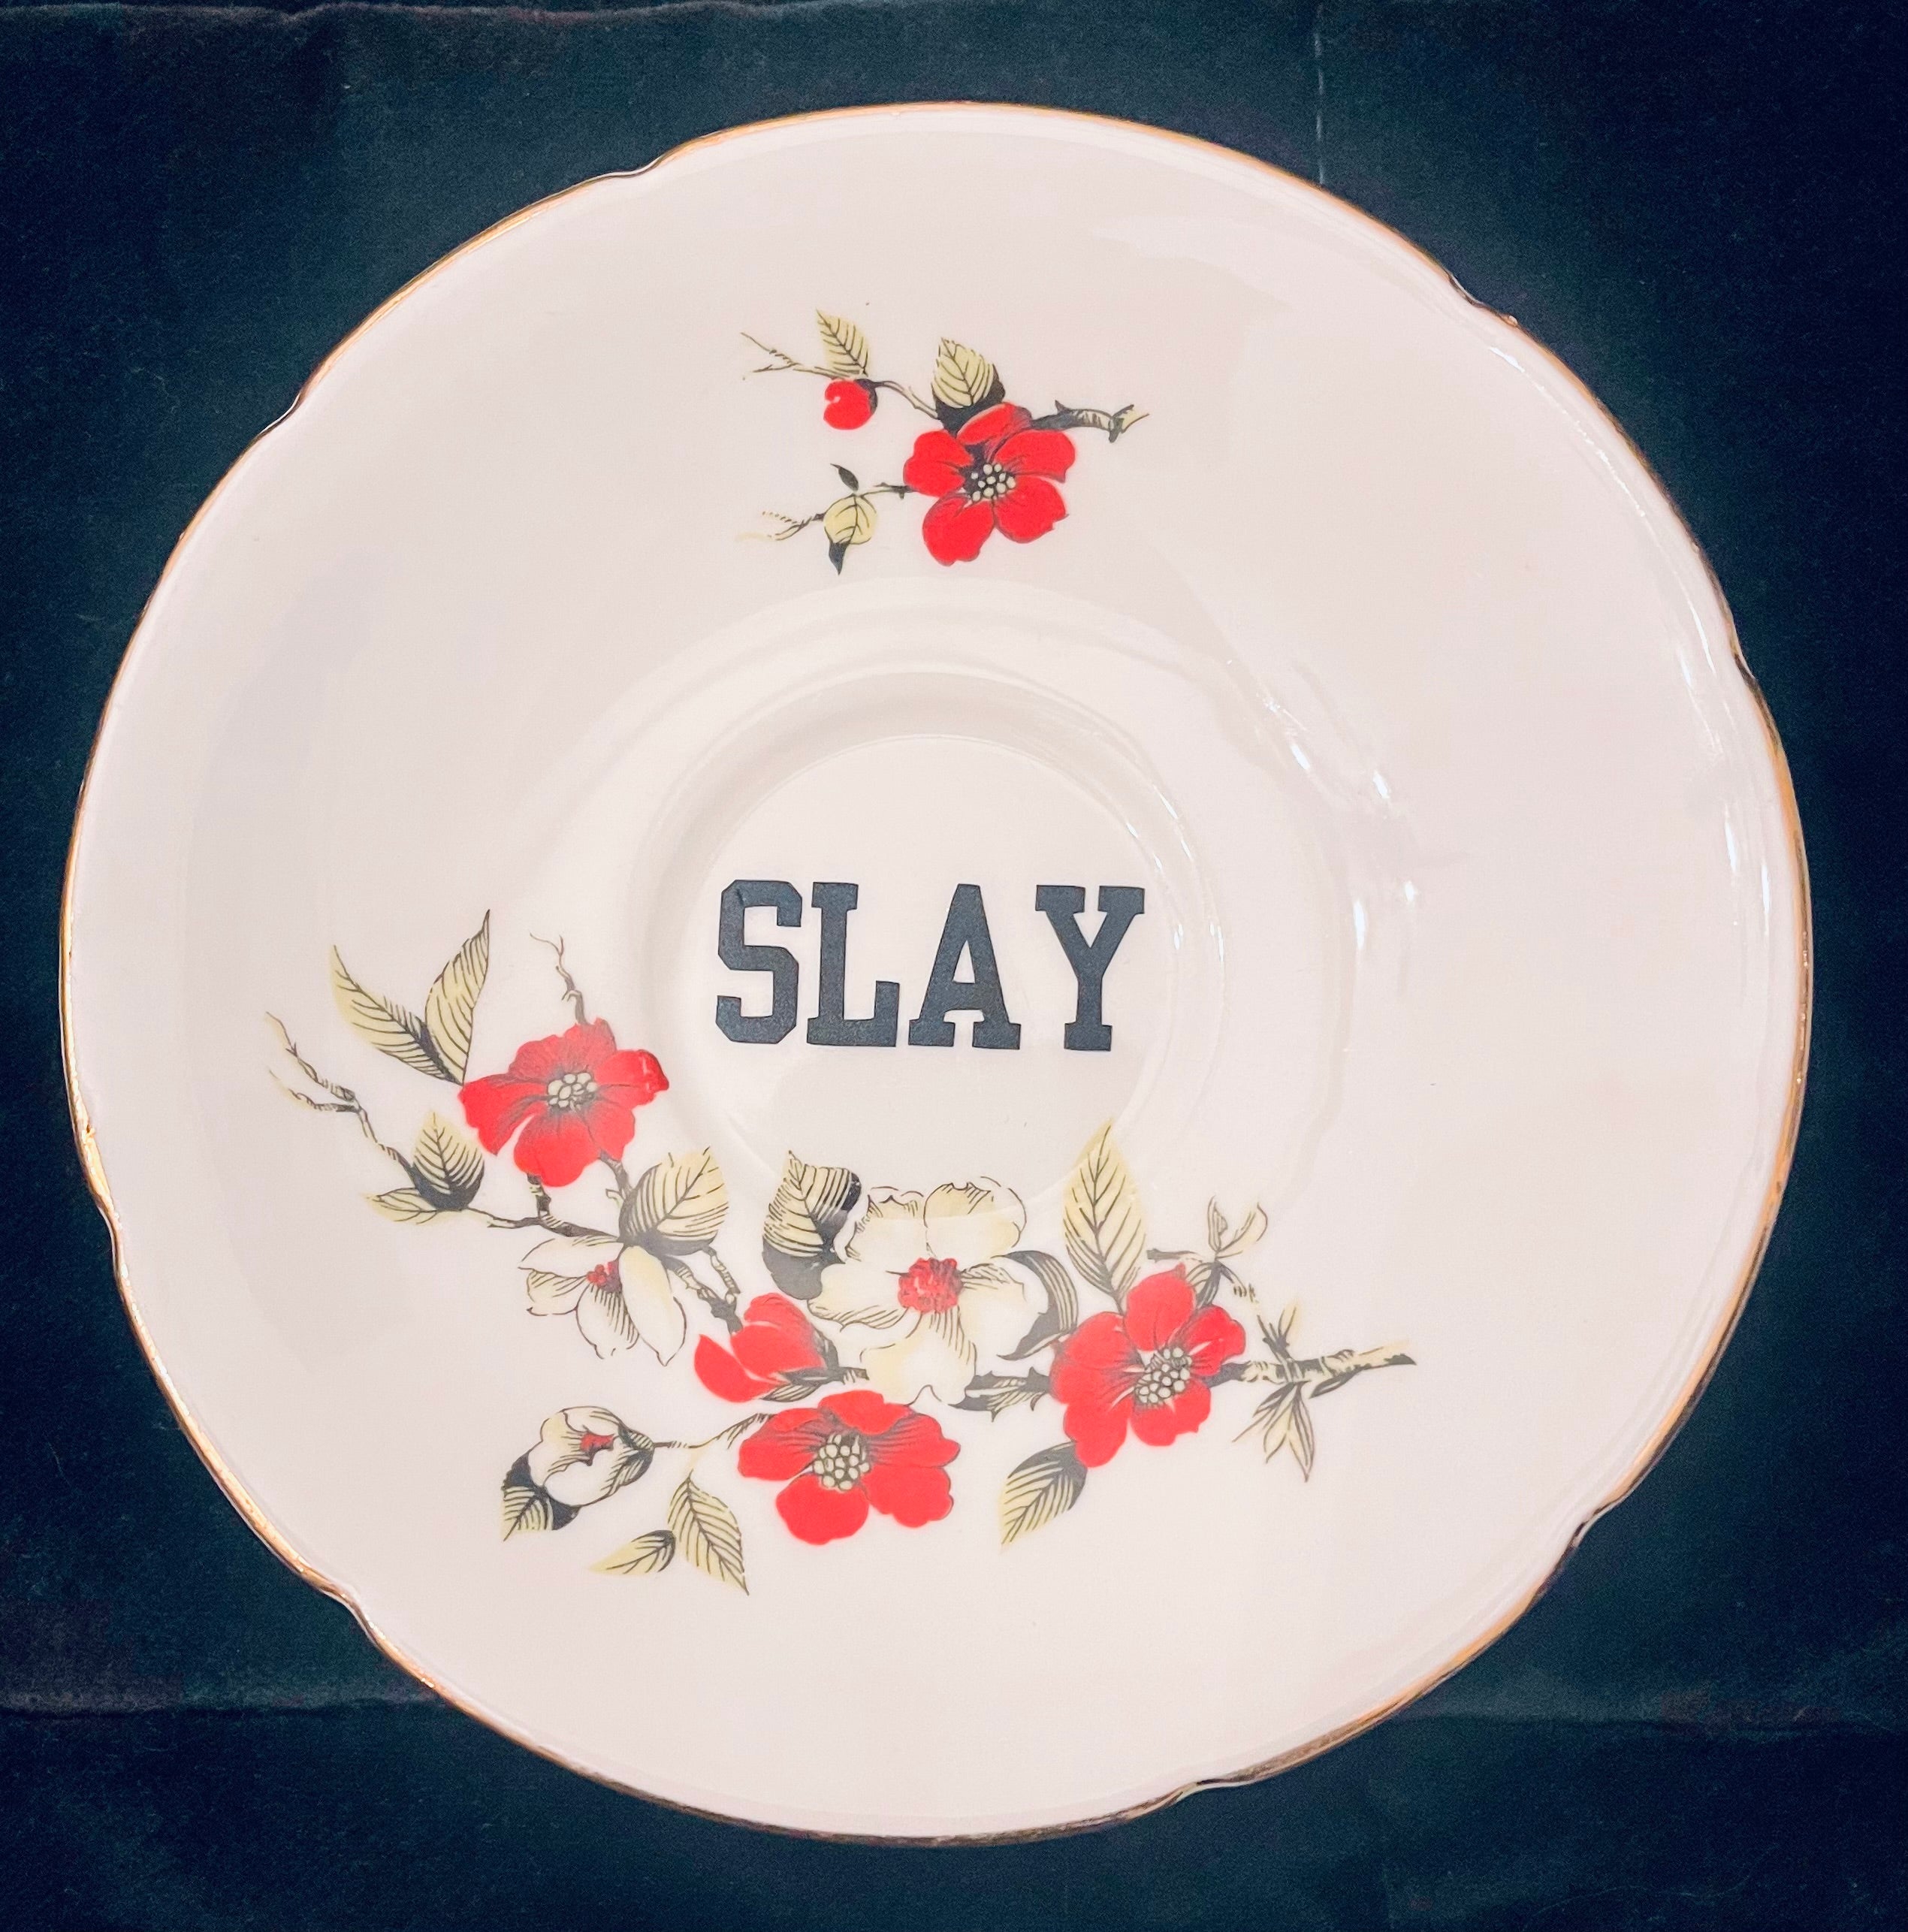 Sweary Plate - Slay